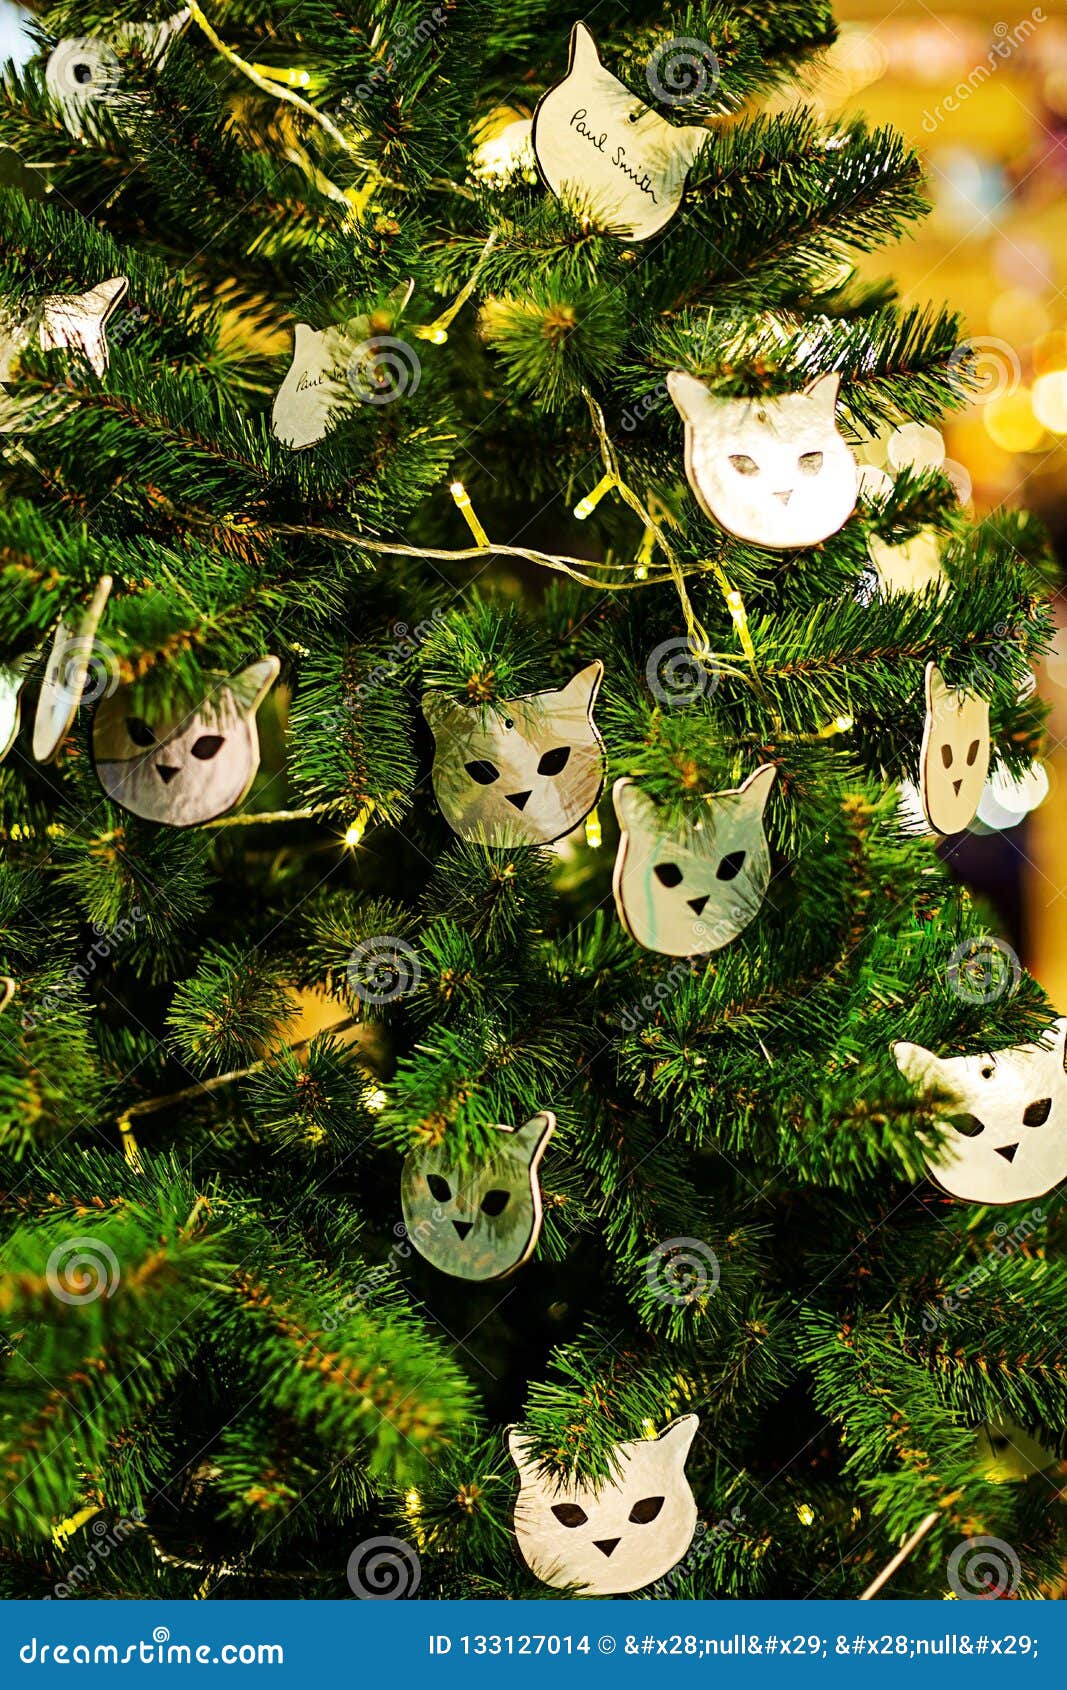 Christmas Tree Decoration Of Cat Shape Stock Photo - Image of ornament, celebration: 133127014